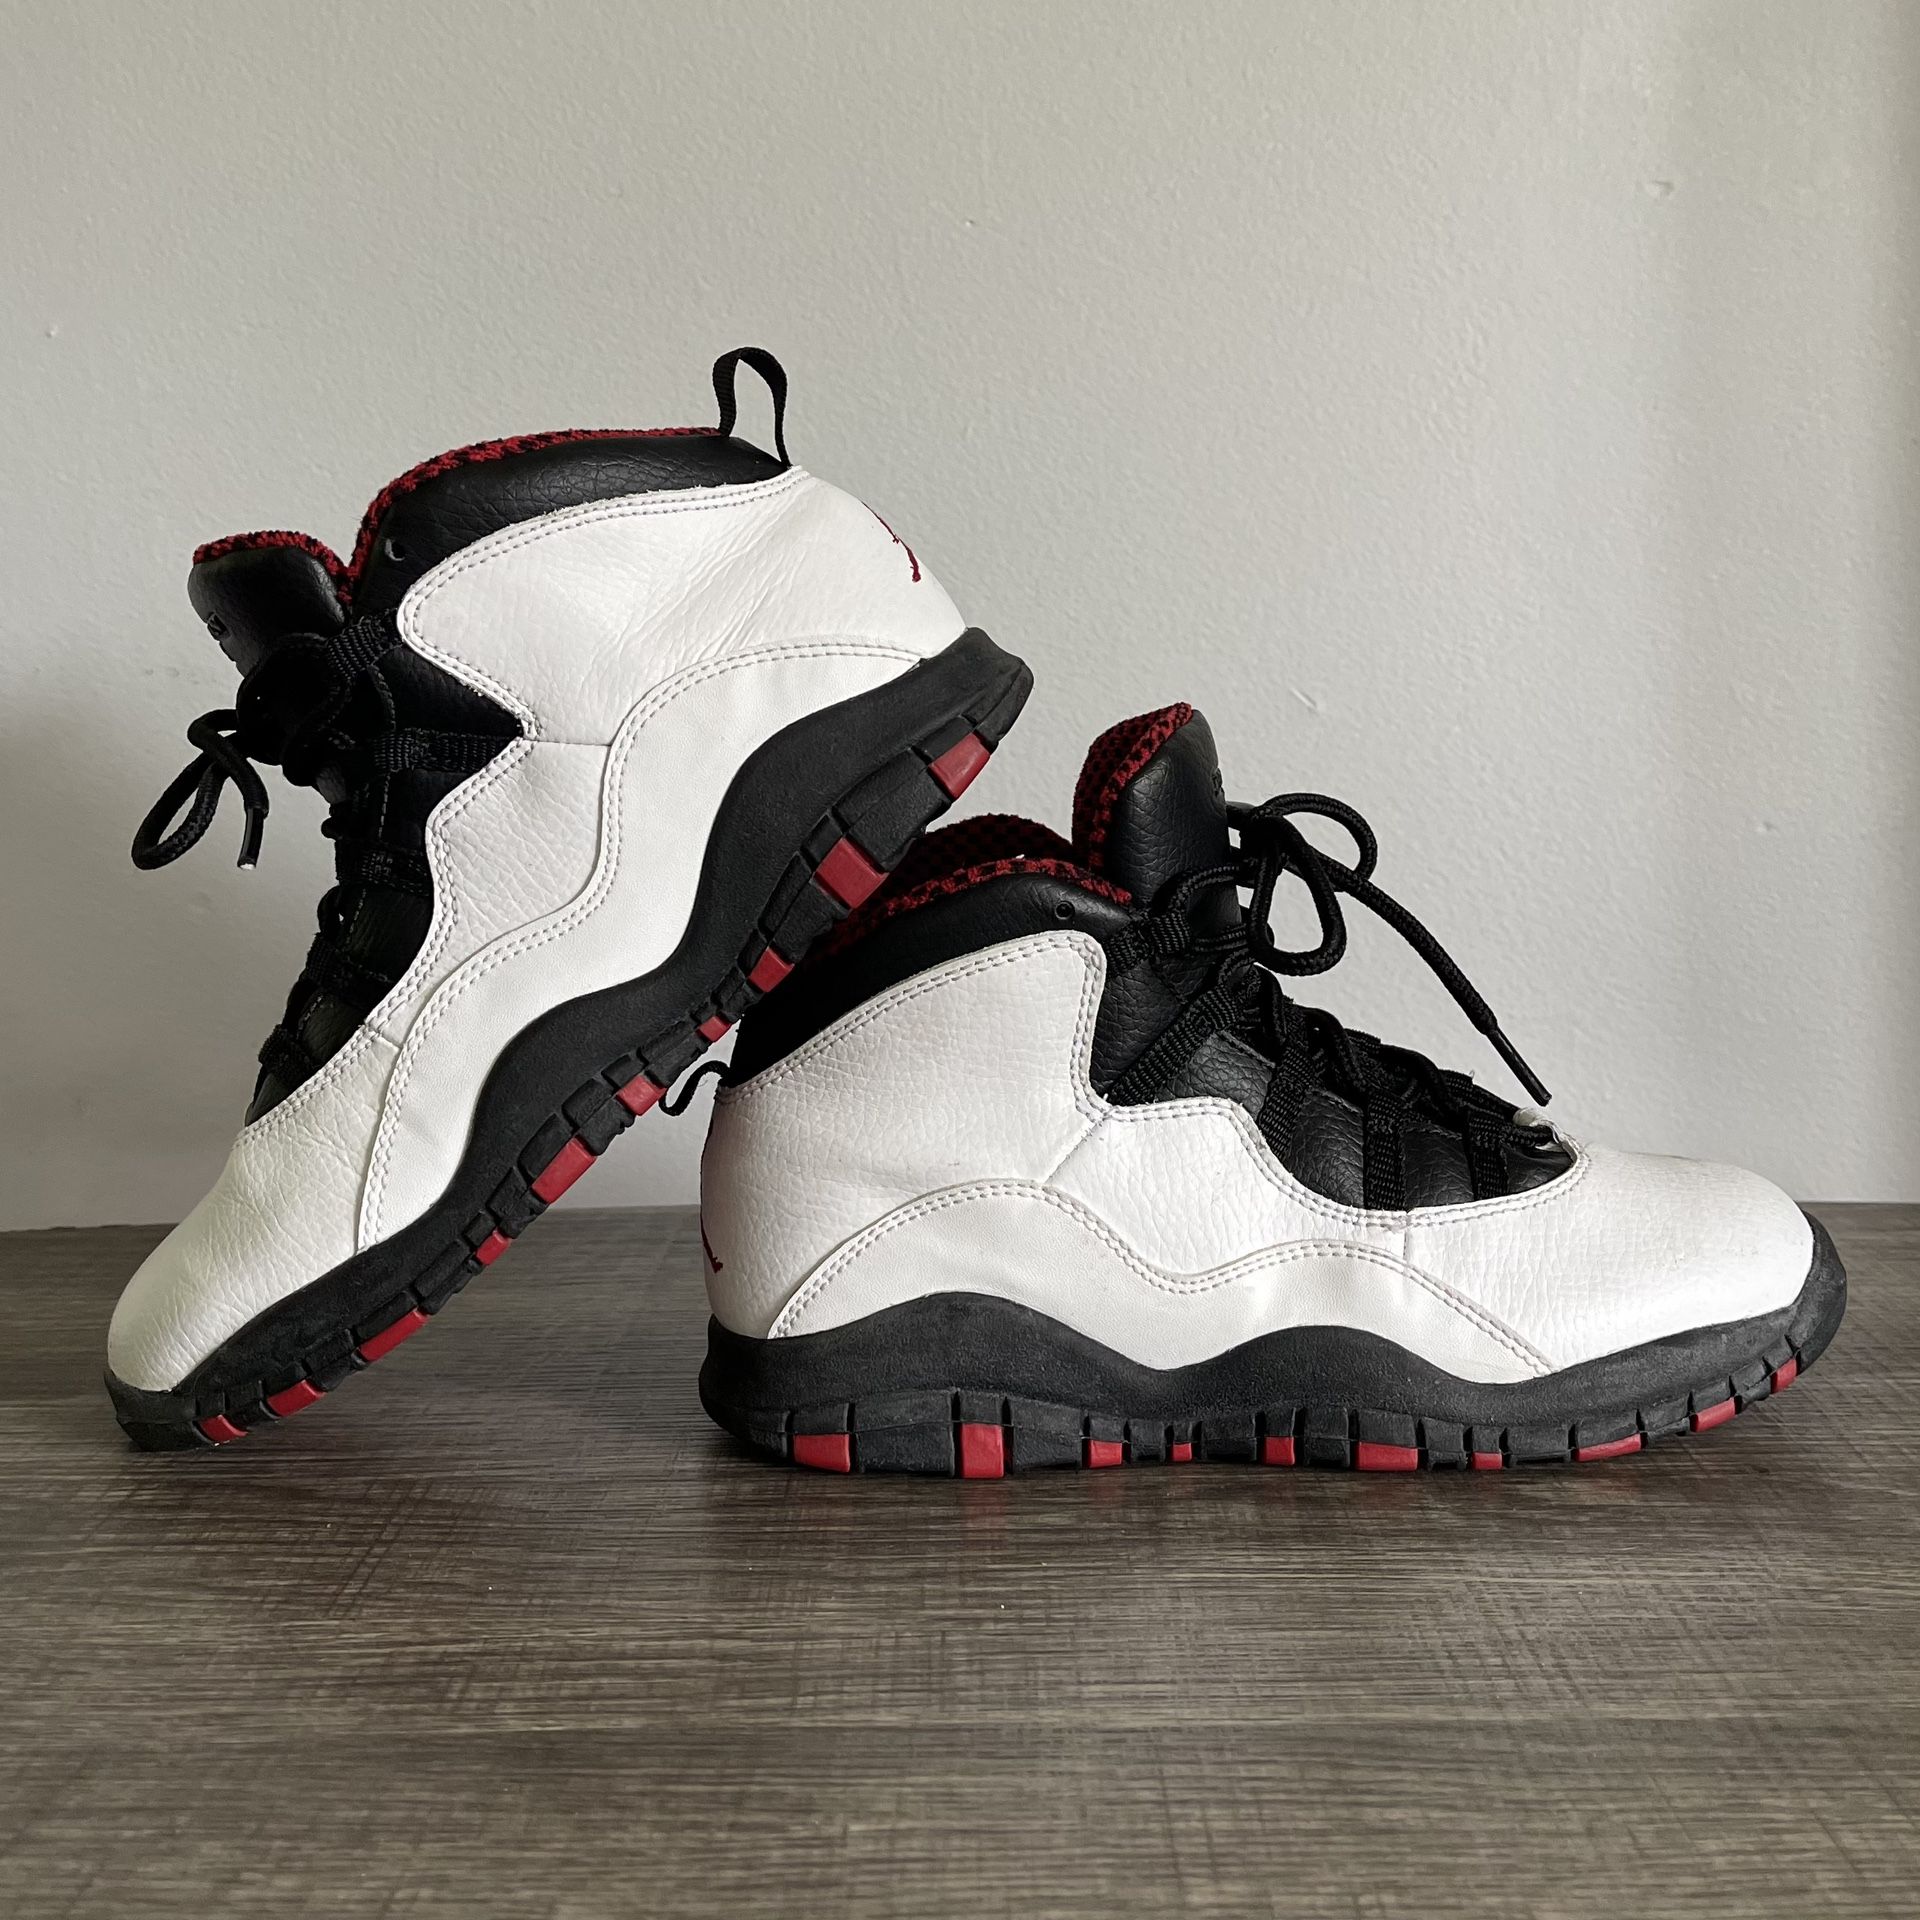 Nike Air Jordan 10 Shoes, White Nike Jordan Sneakers, Size 3Y